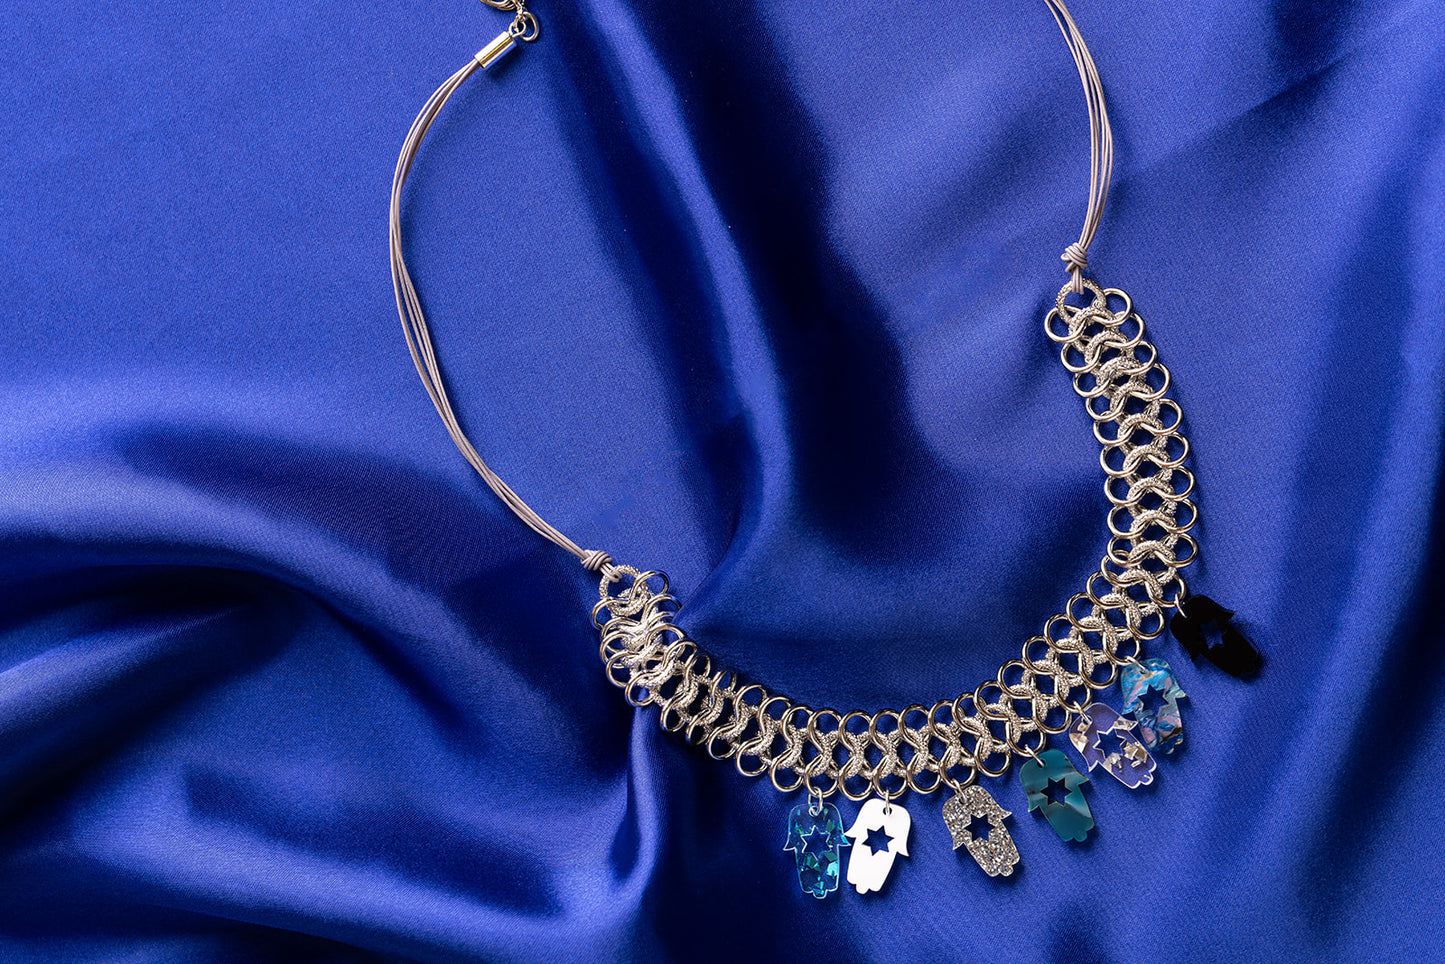 Hamsa Charm Necklace